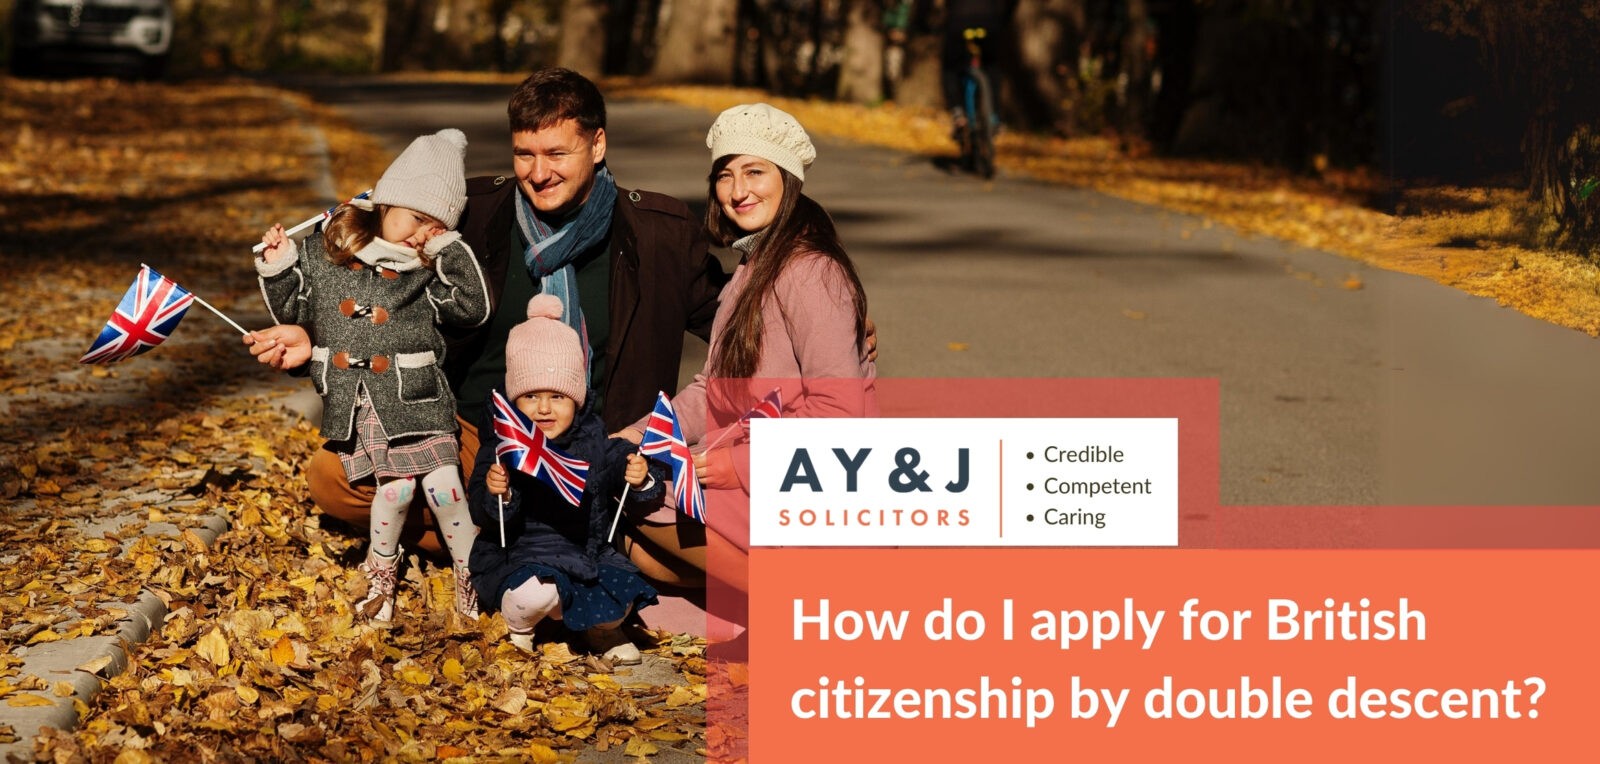 British citizenship by double descent